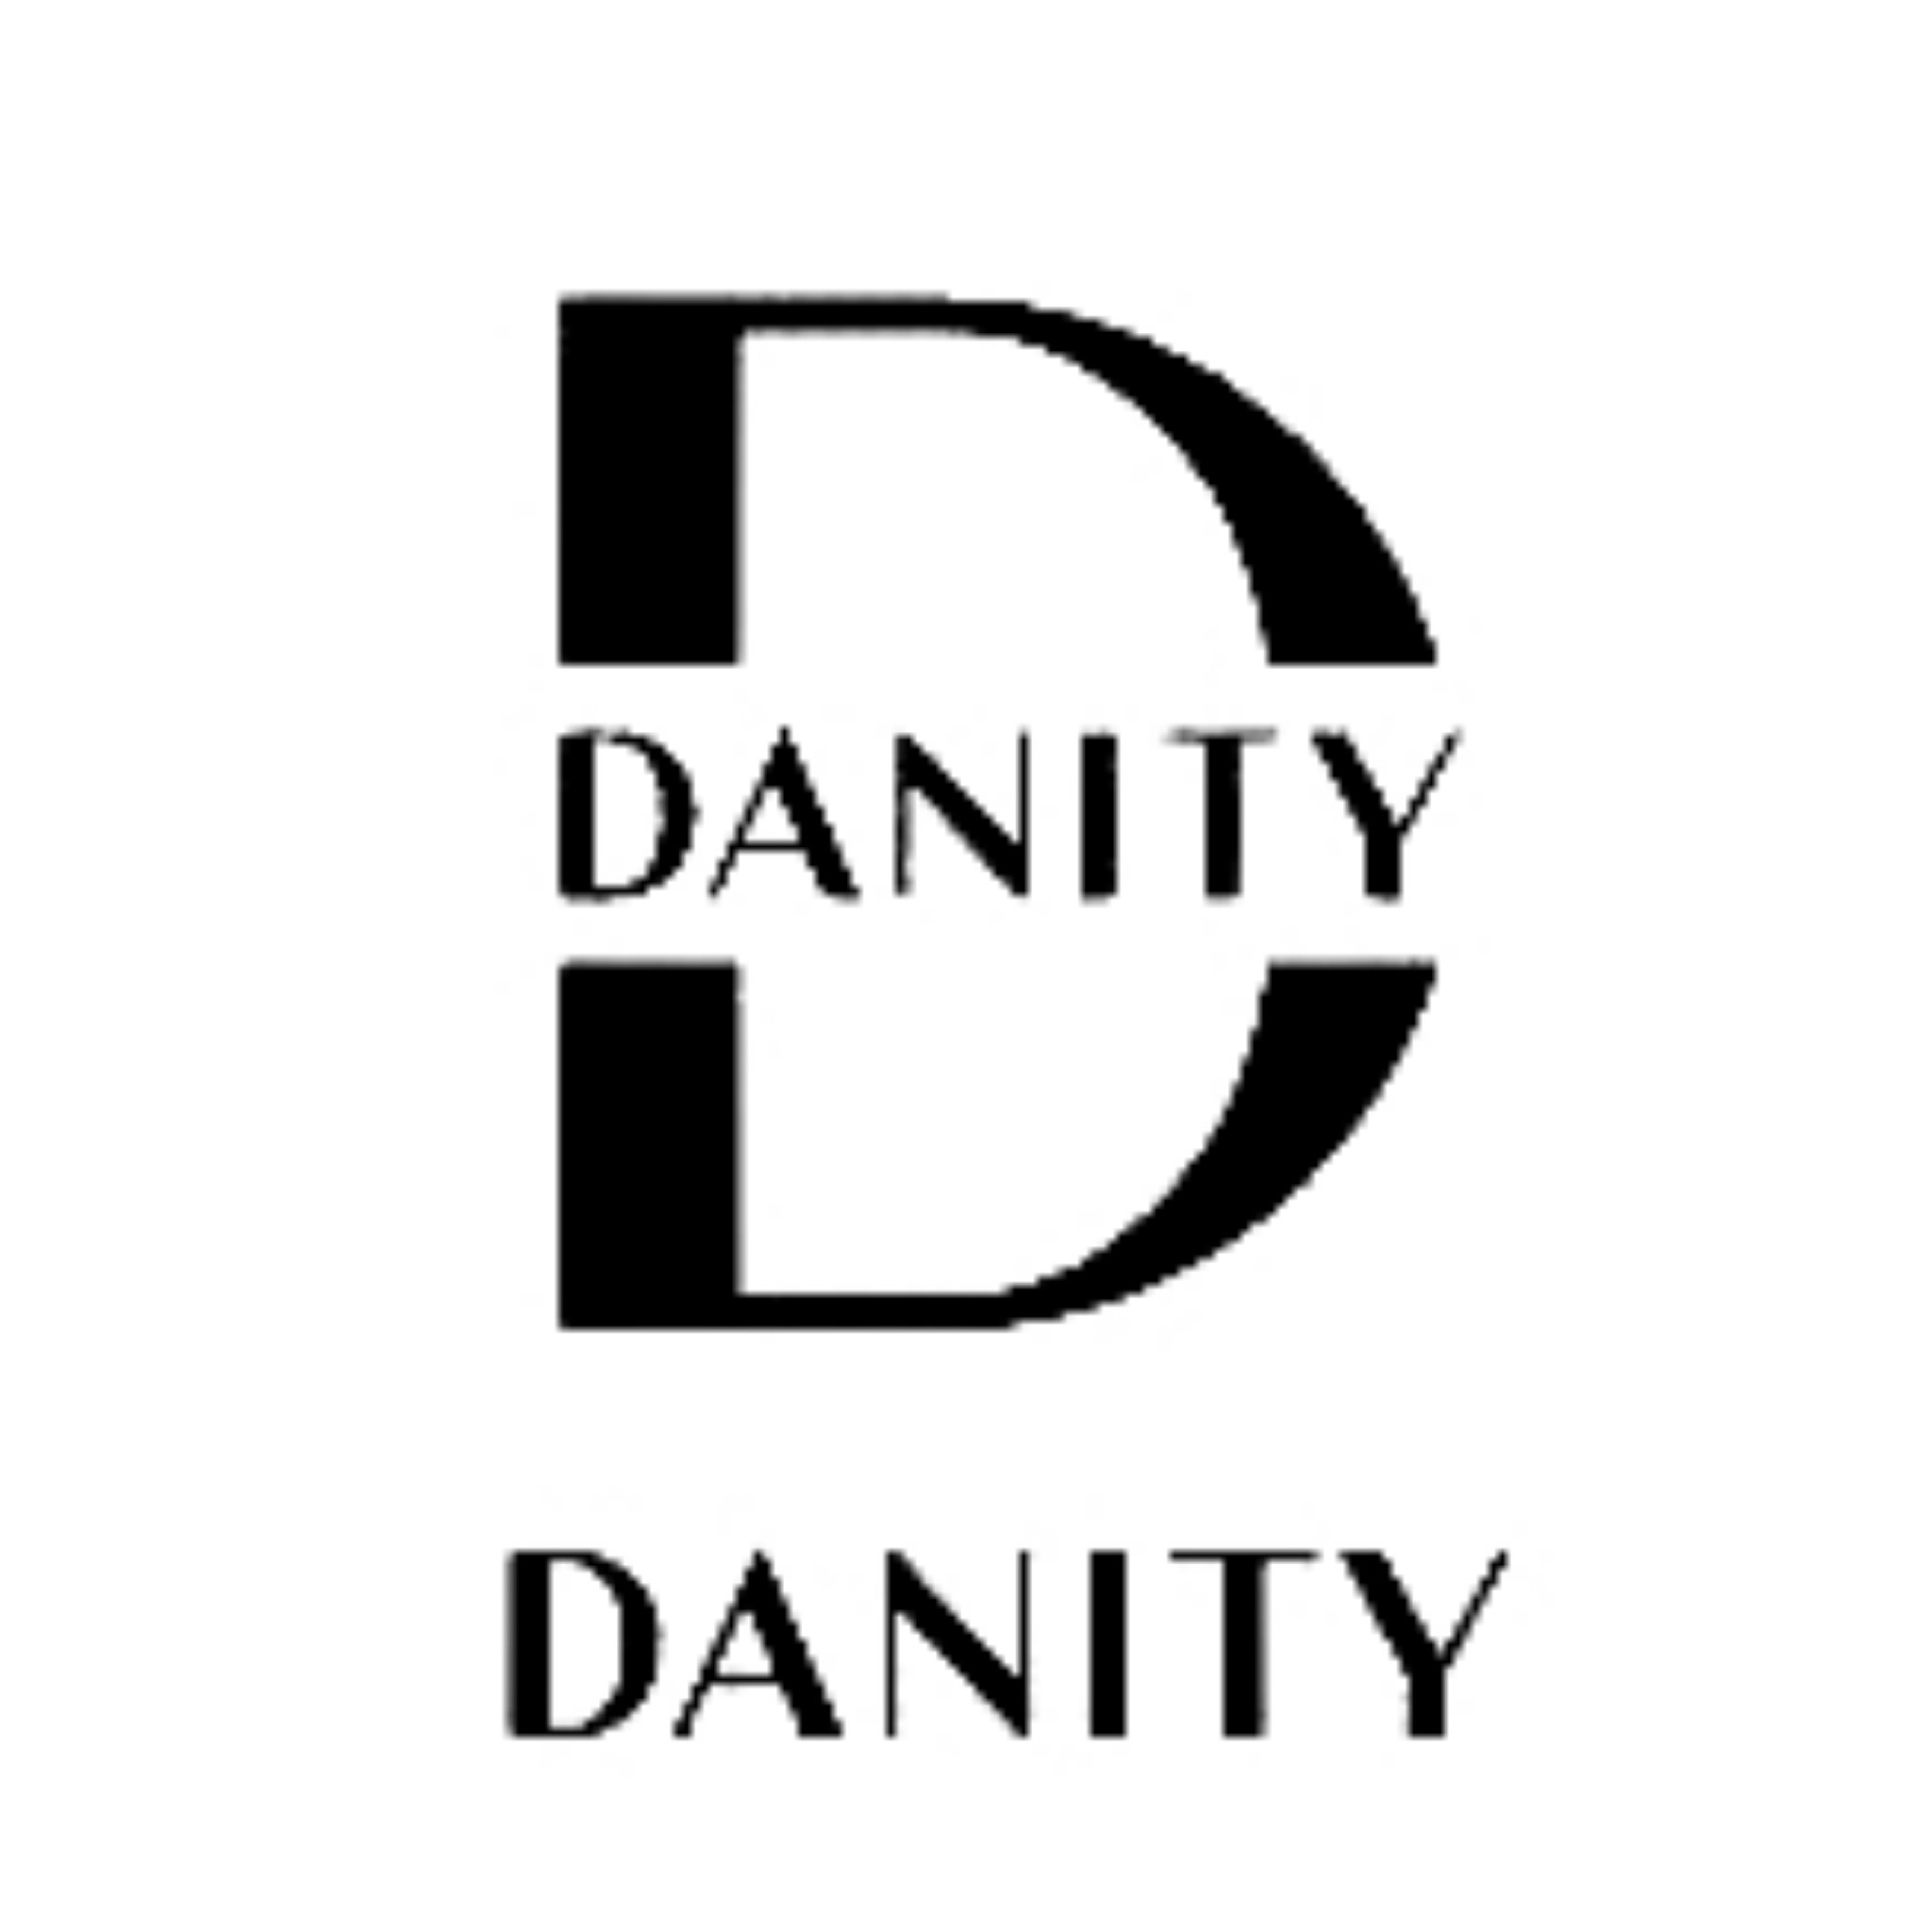 Image result for danity logo